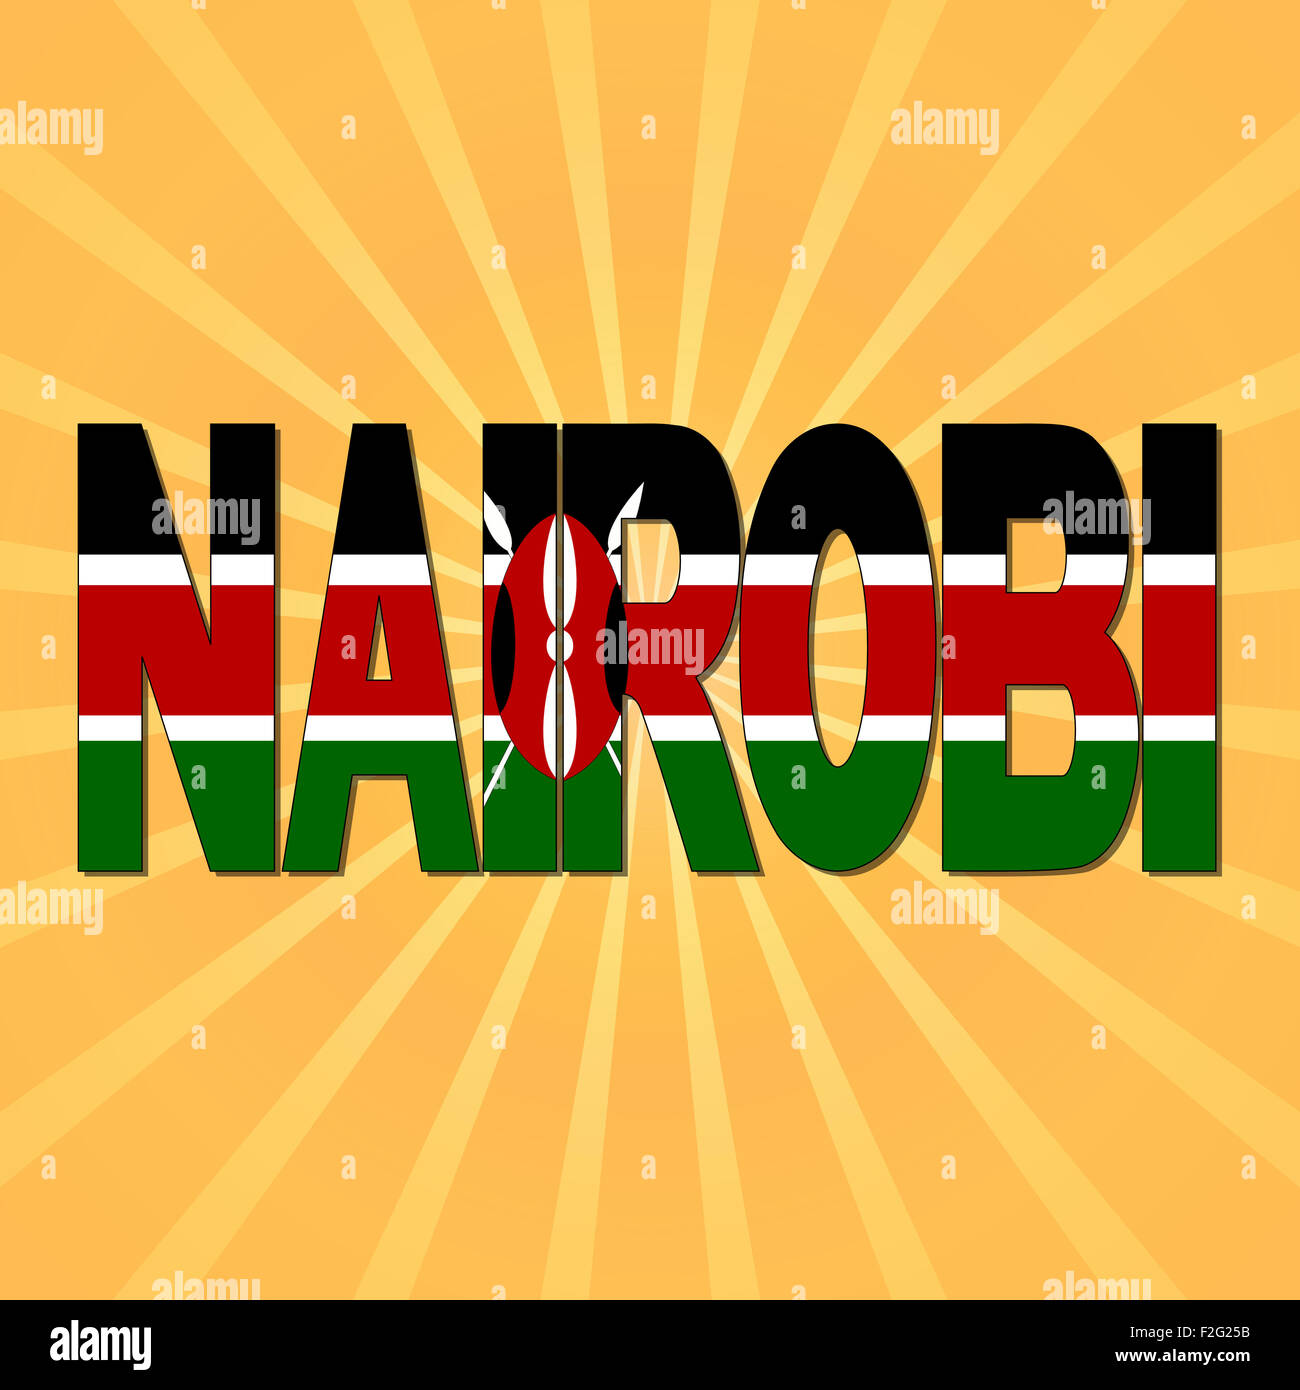 Nairobi flag text with sunburst illustration Stock Photo